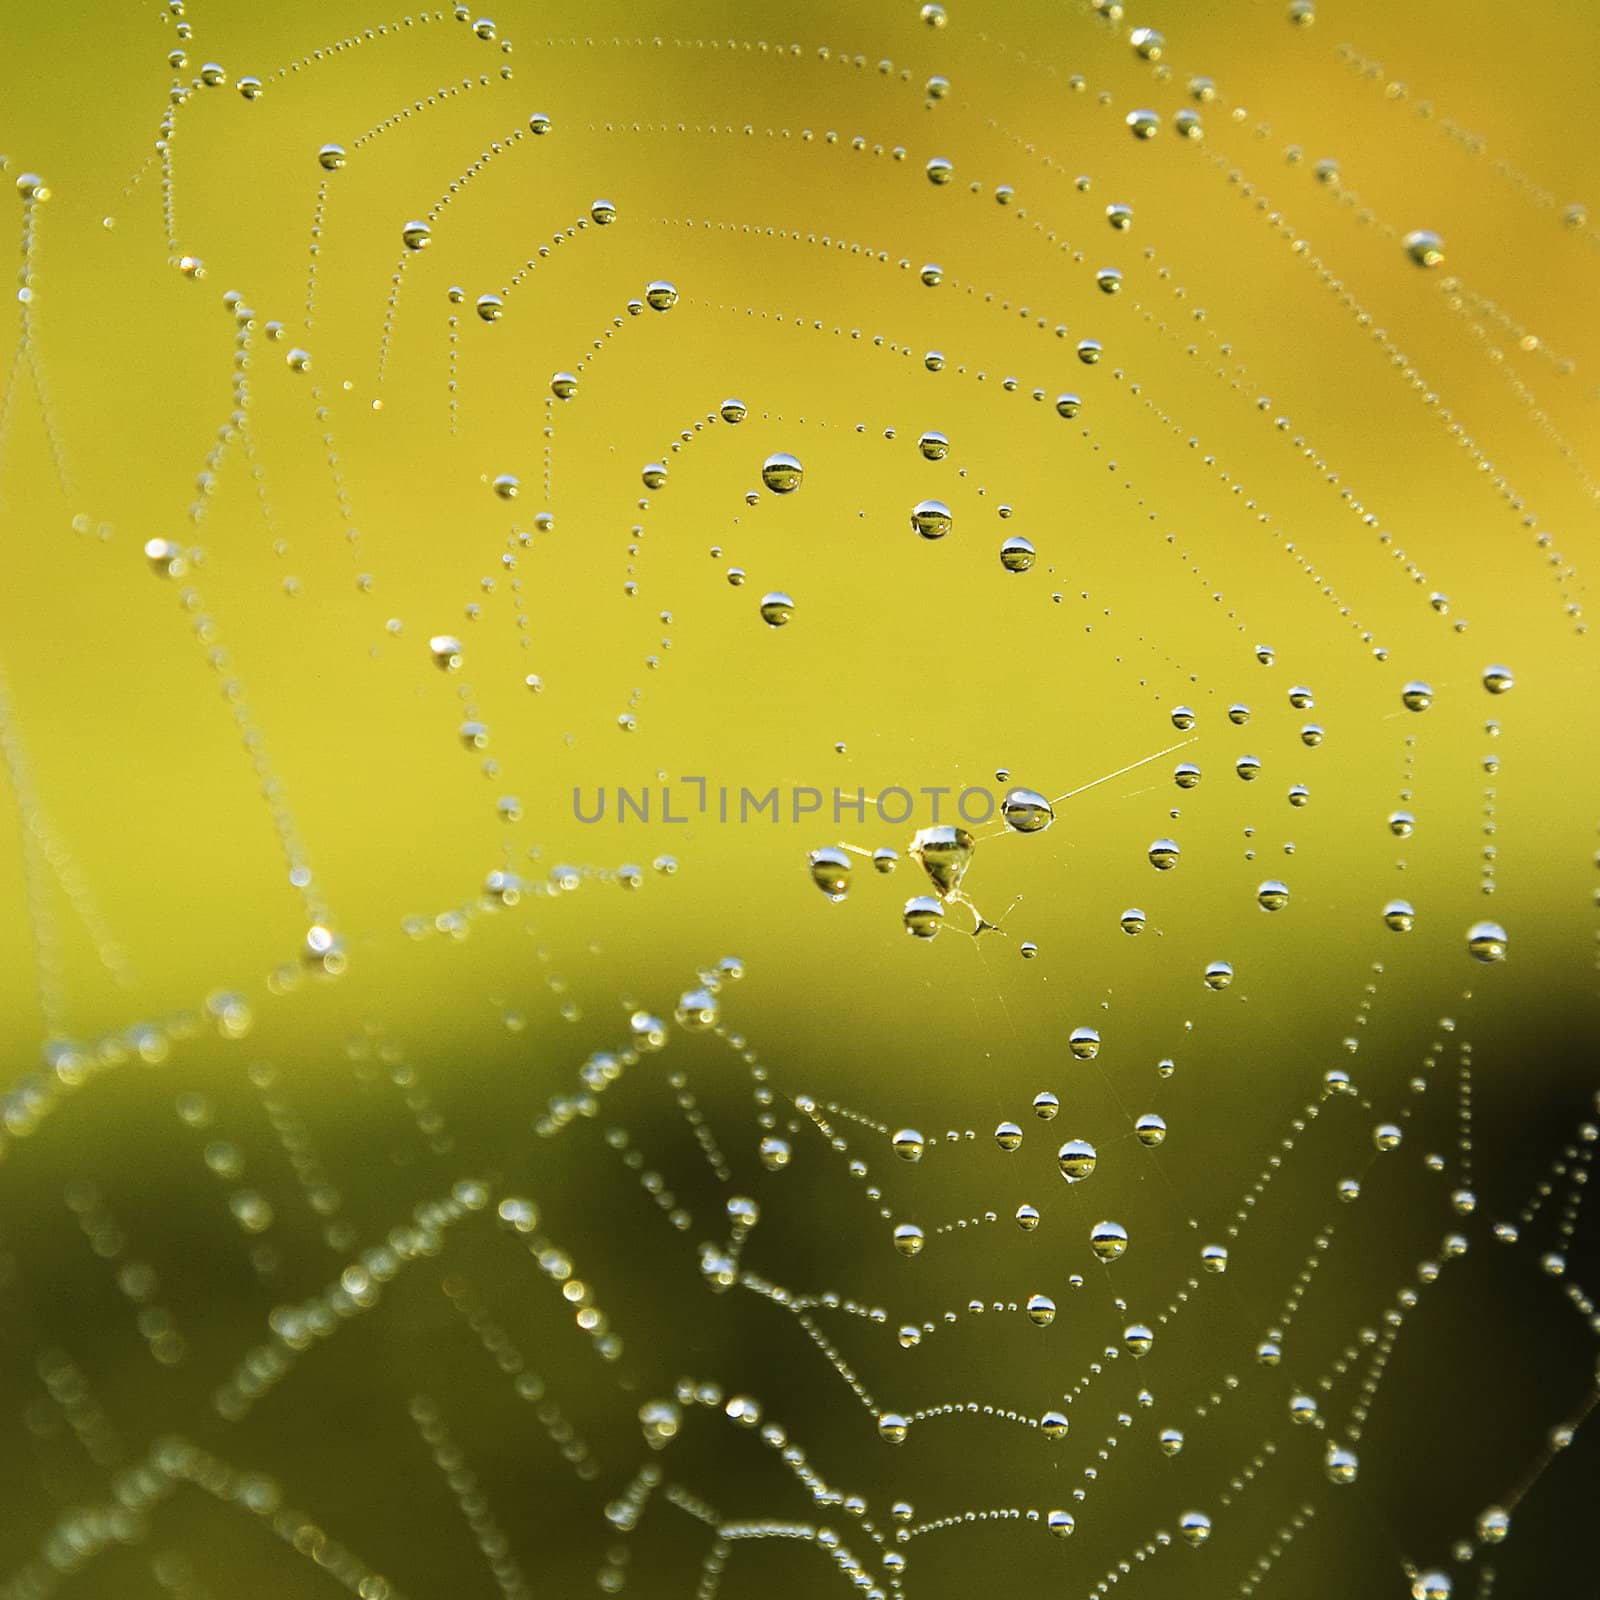 Spiders web